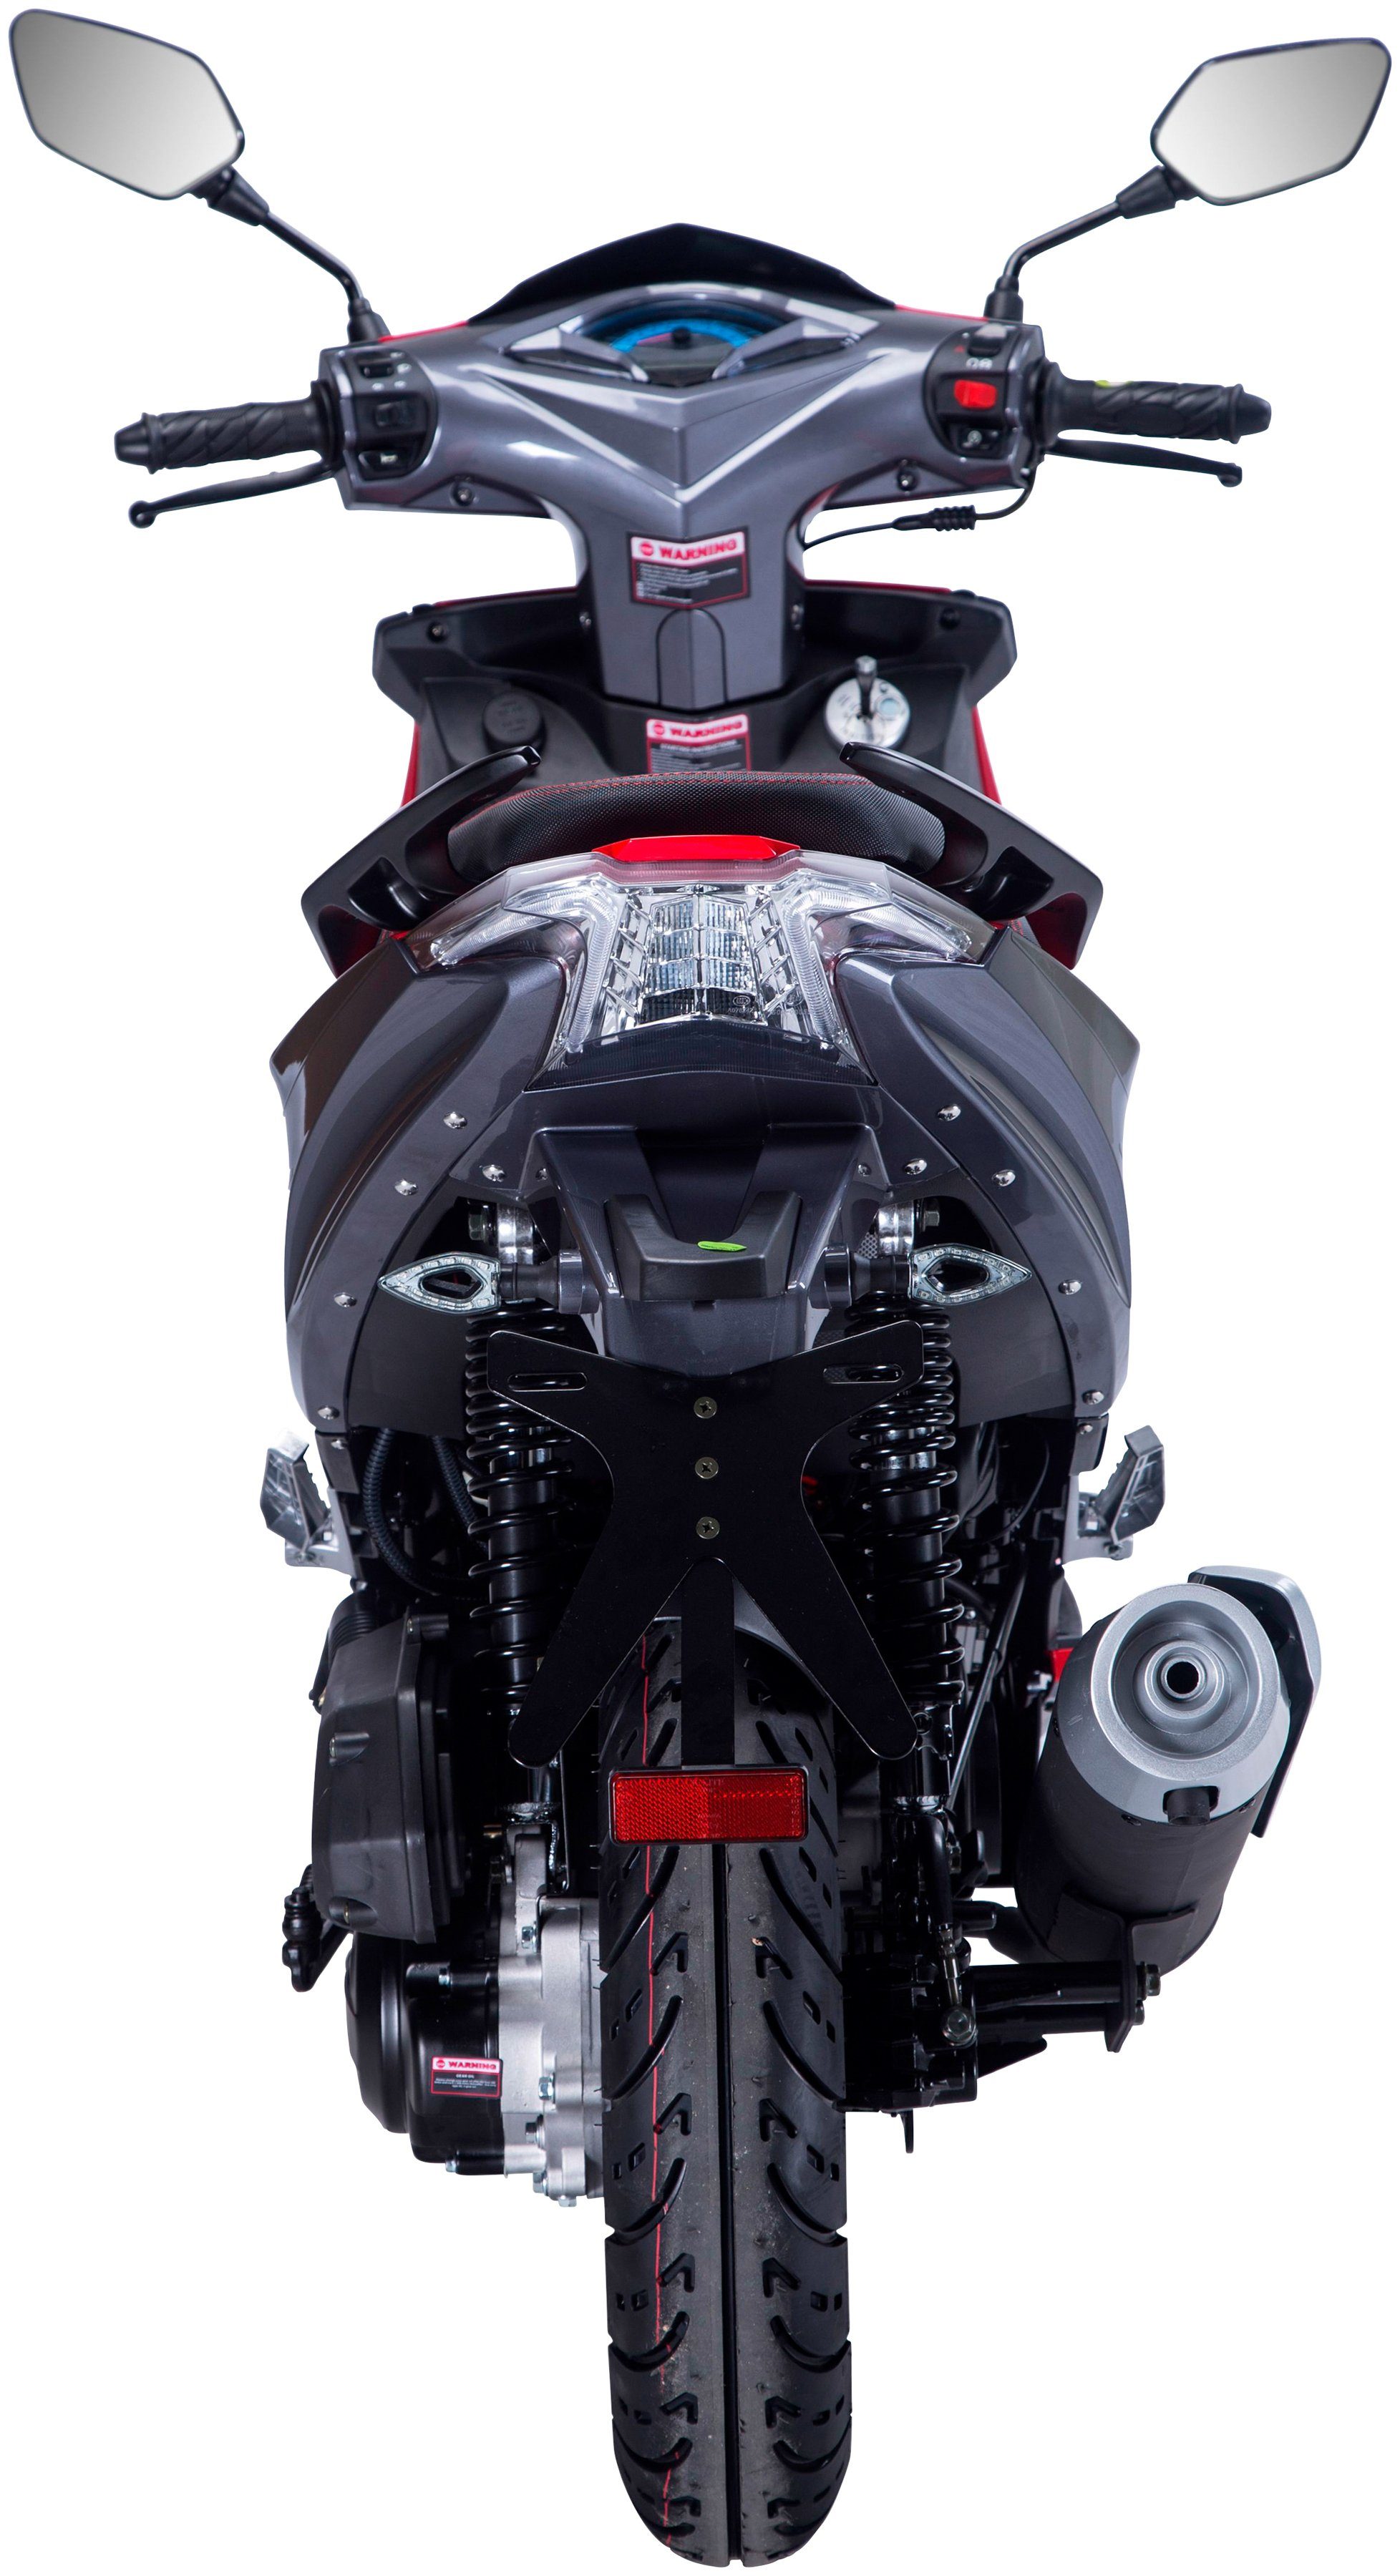 GT UNION Motorroller Striker, 45 5 Euro km/h, 50 schwarz/rot ccm